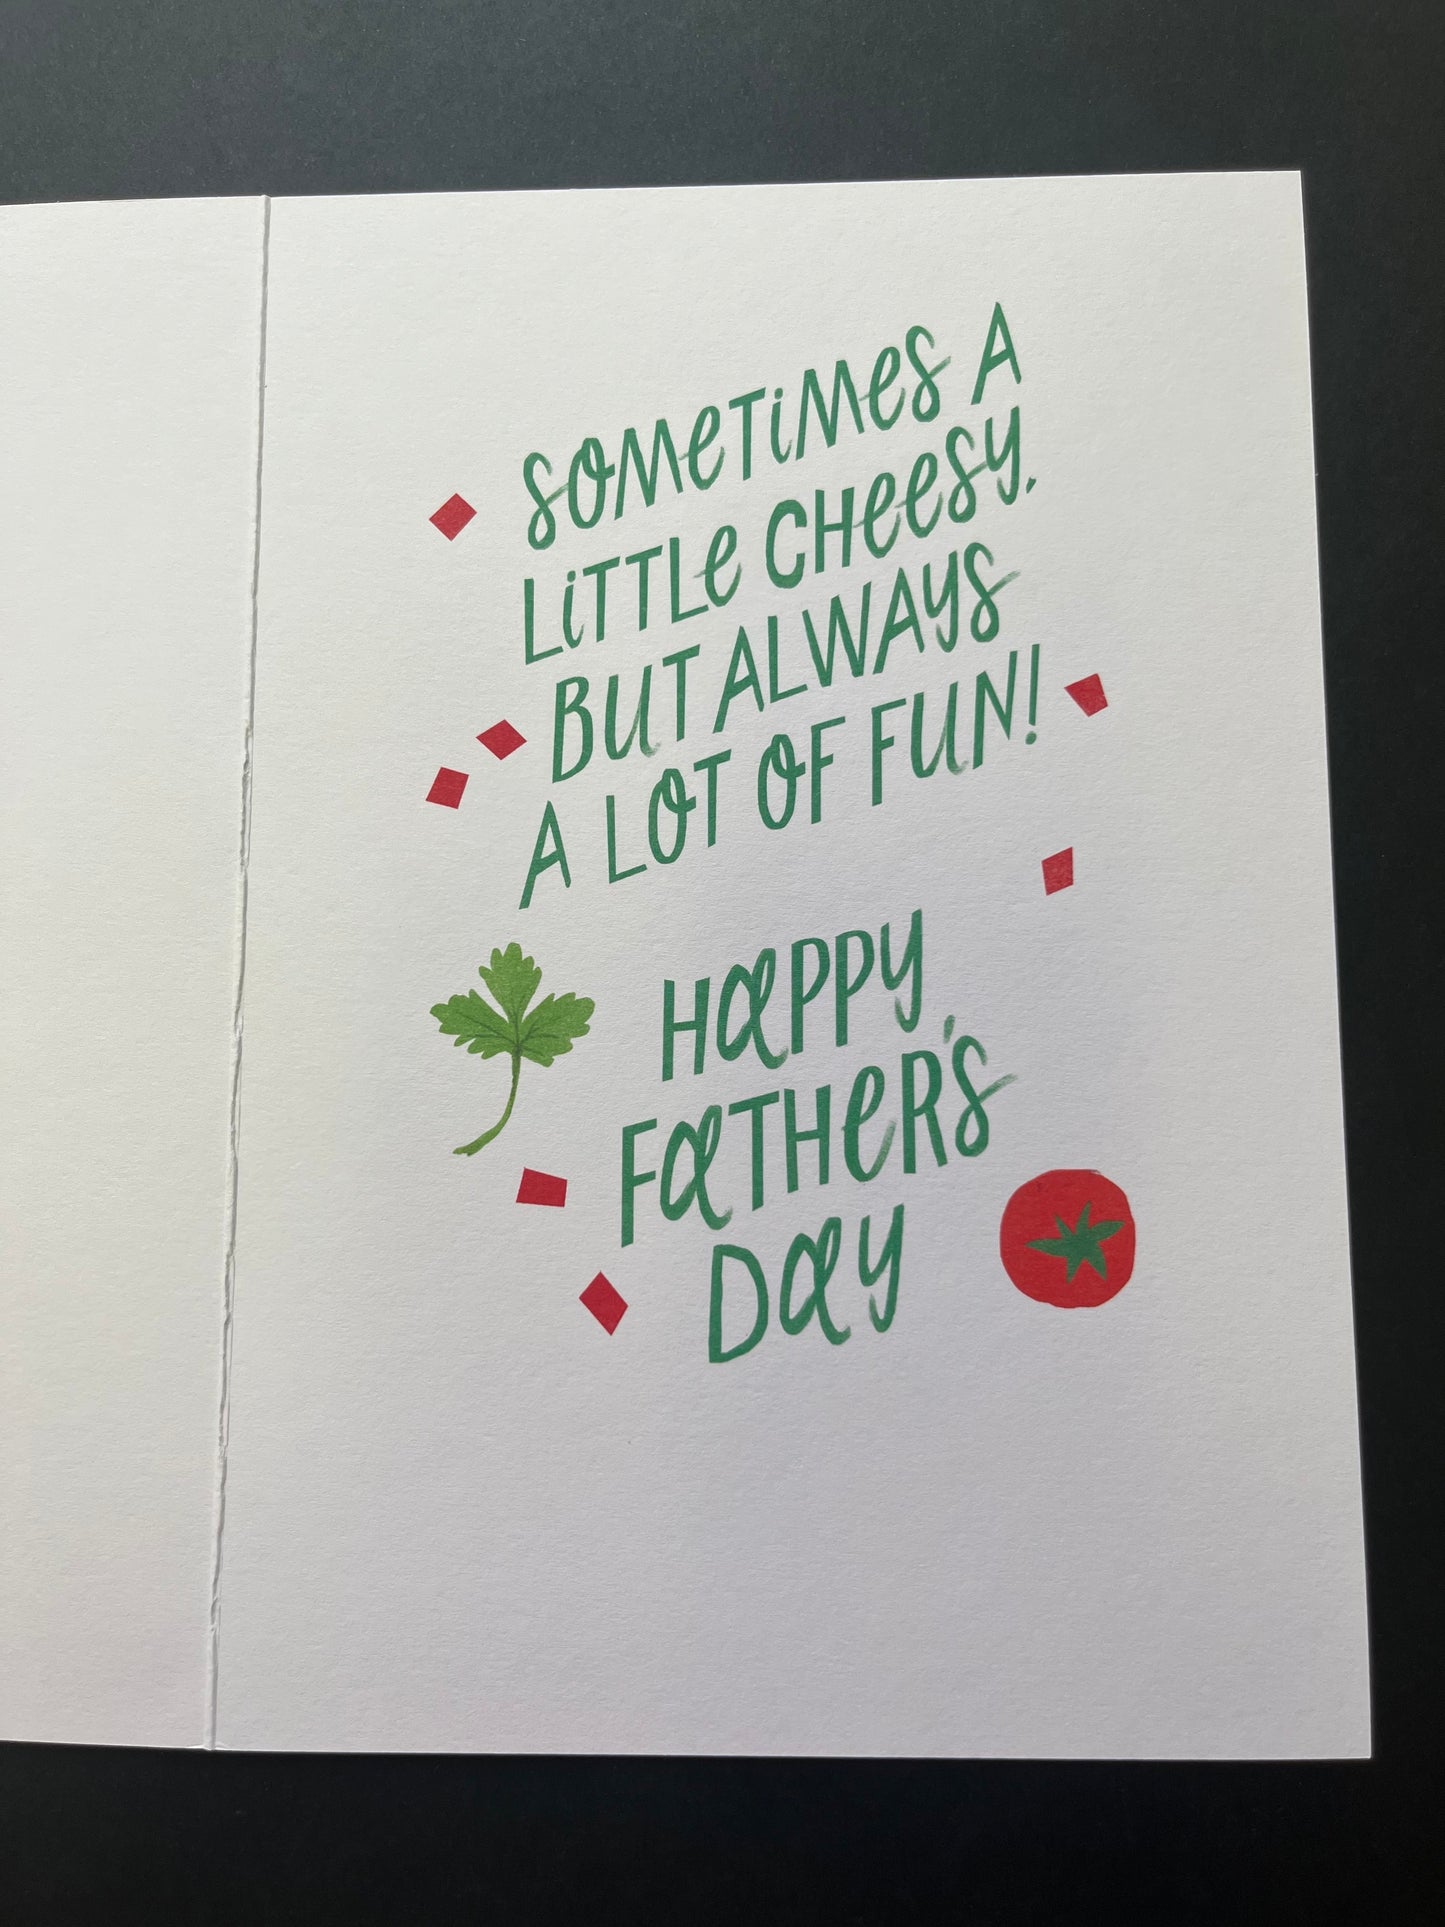 Nacho Average Dad - Father's Day Card